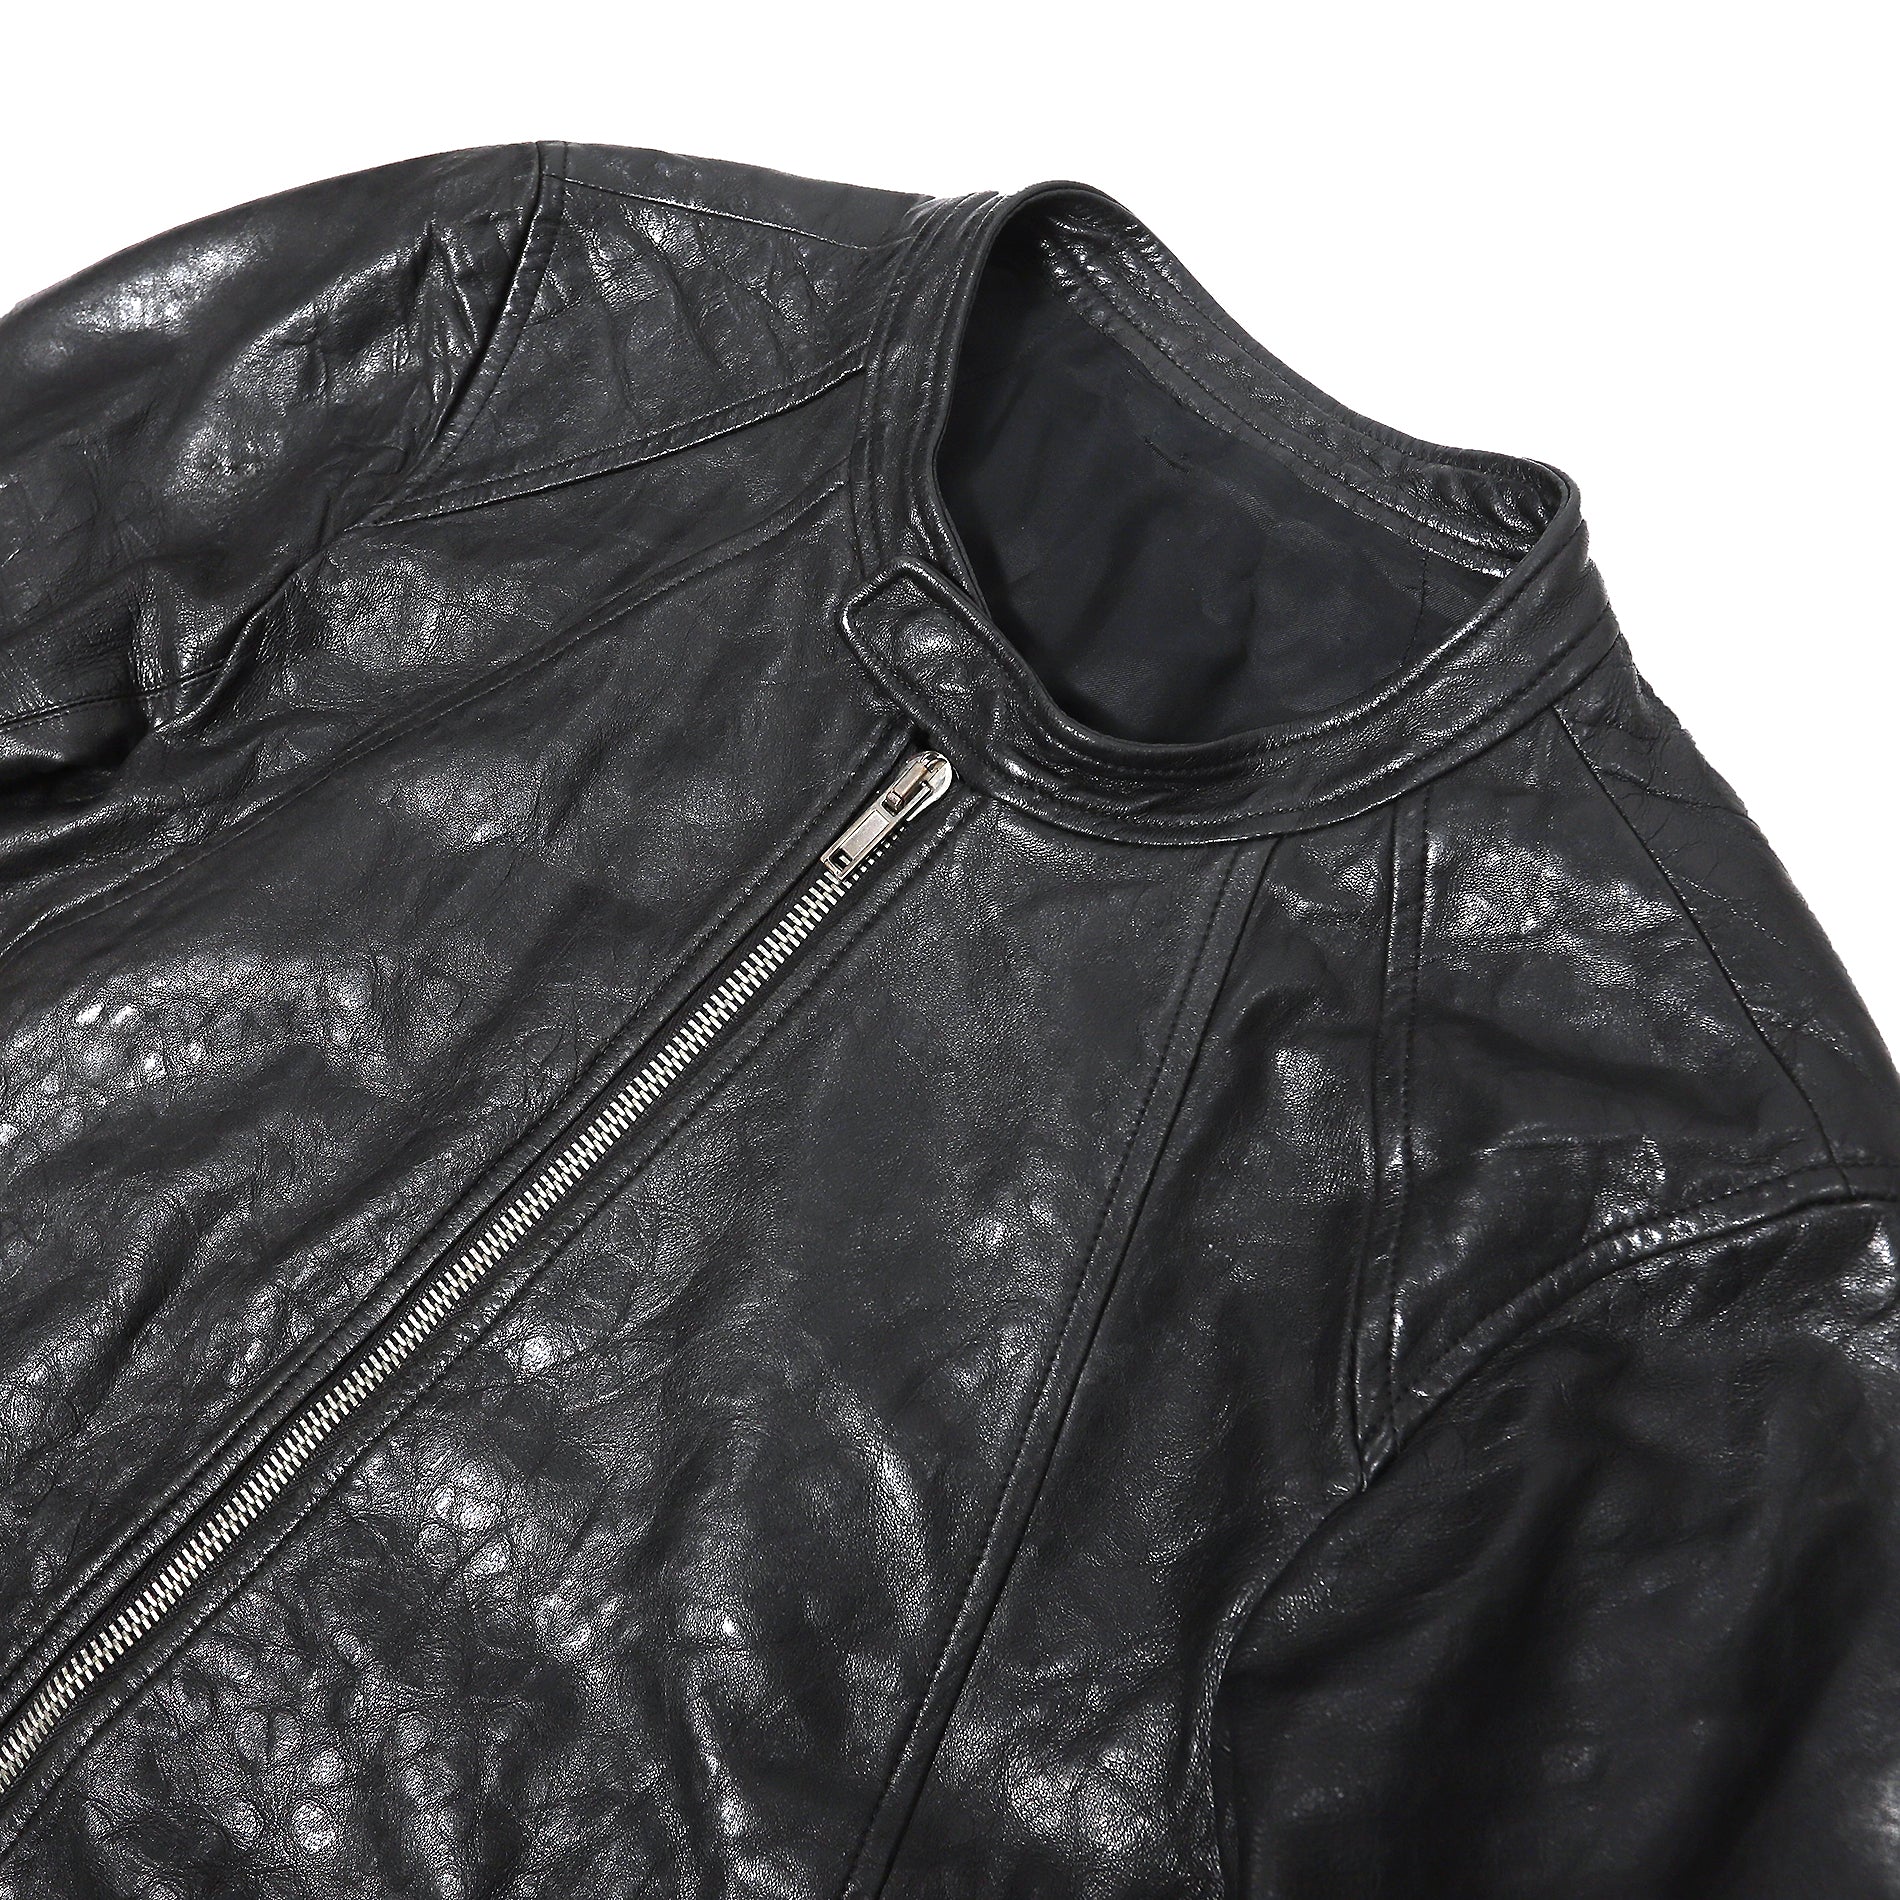 Rick Owens SS10 Hammered Lamb Intarsia Leather Jacket - Ākaibu Store